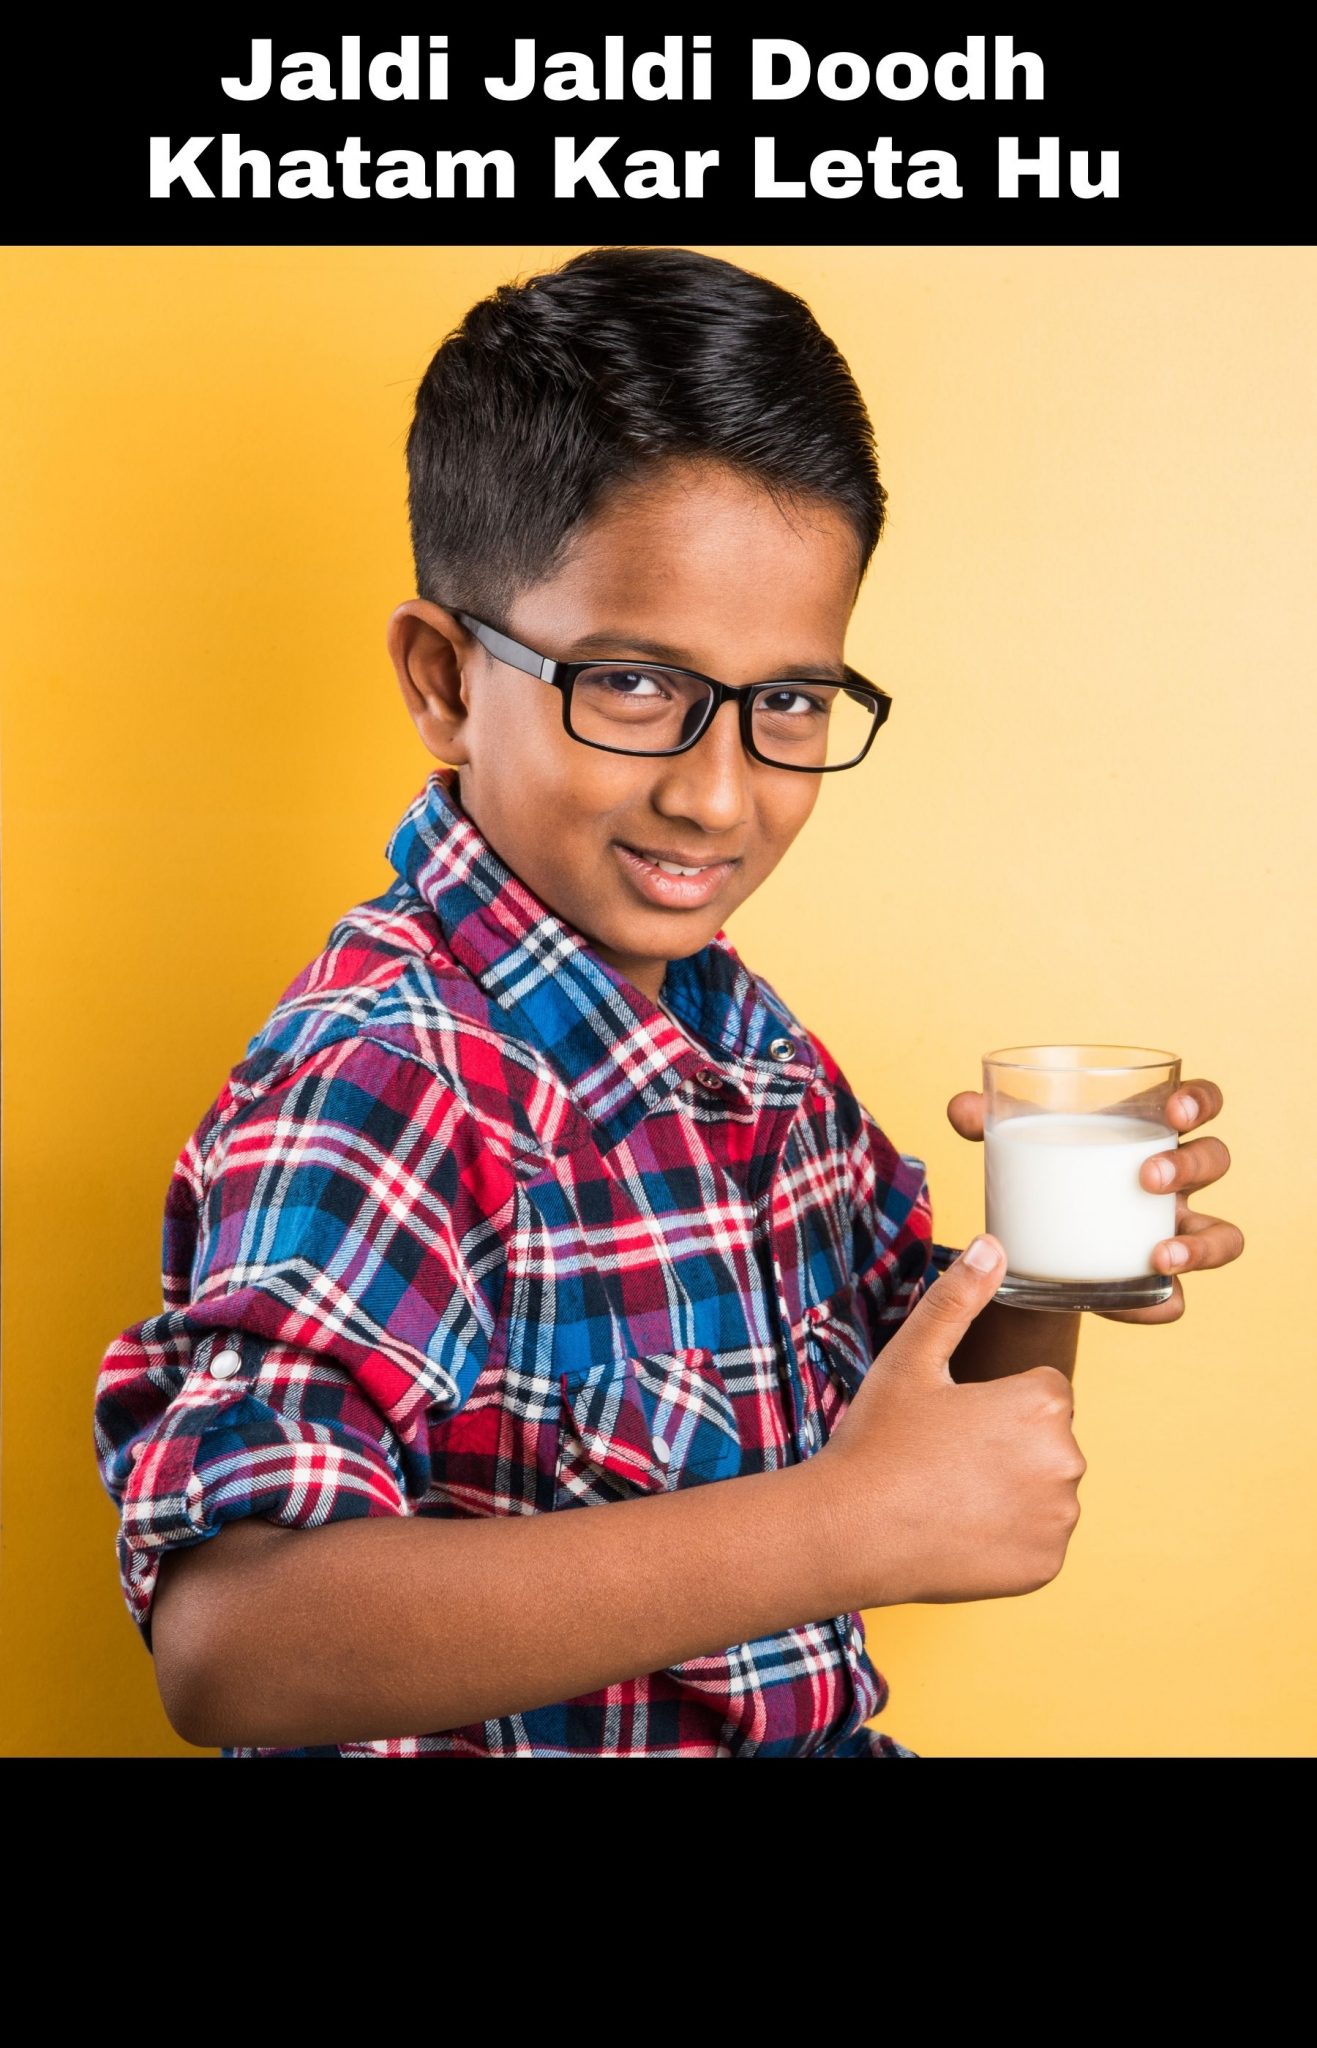 Jaldi Jaldi Doodh Khatam Kar Leta Hu meme template of an Indian boy with a glass of milk